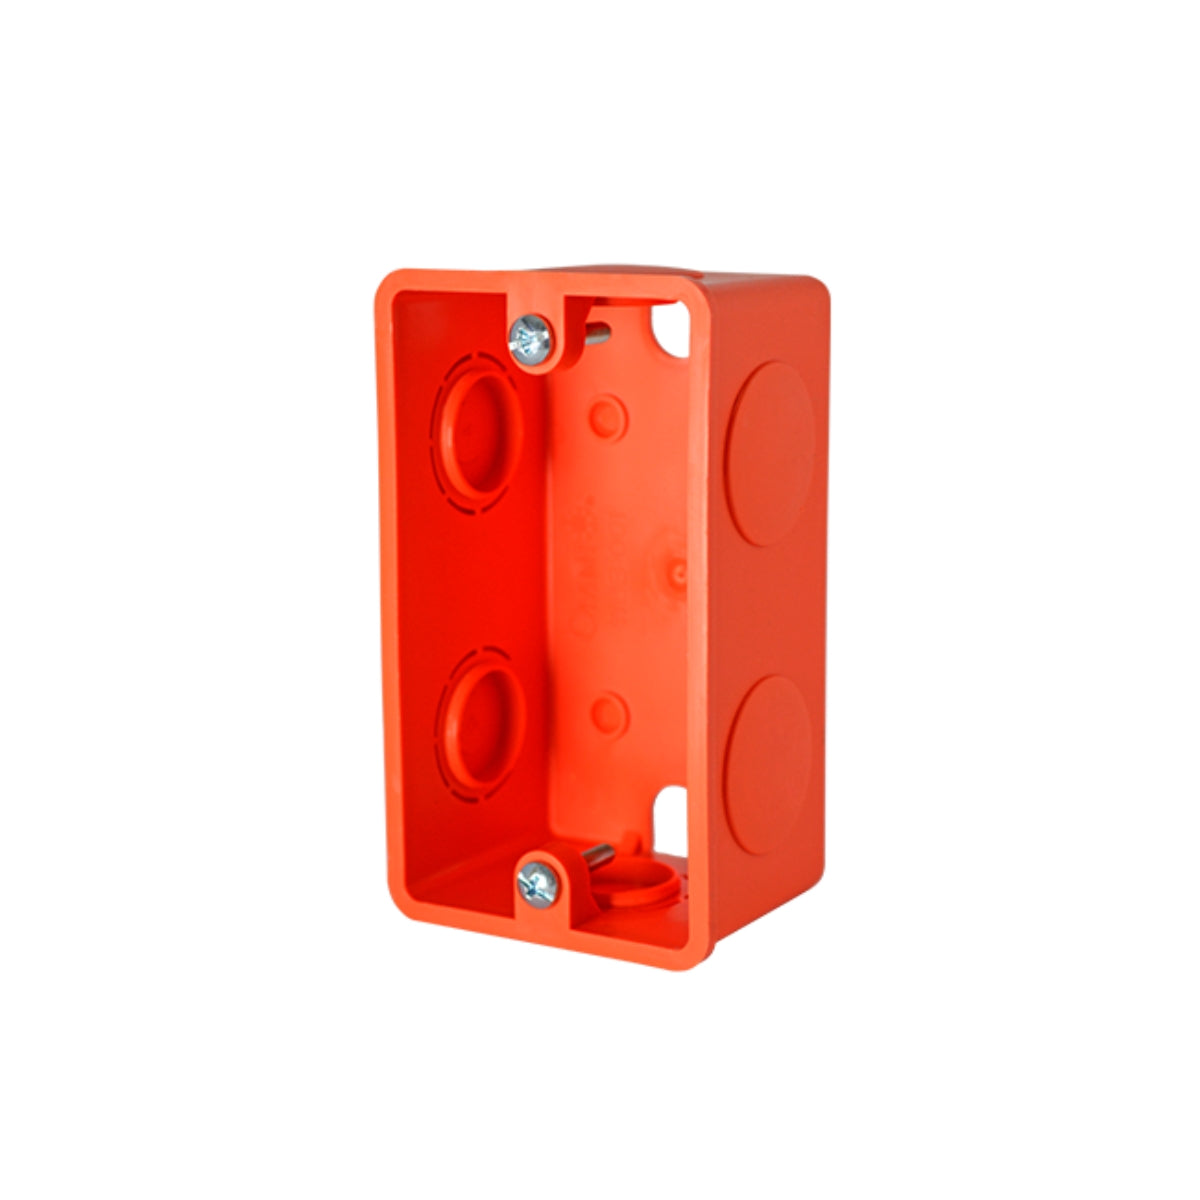 OMNI WUB-001 2 x 4" PVC Utility Box with Mounting Screw, Fire Retardant and Shock Resistant